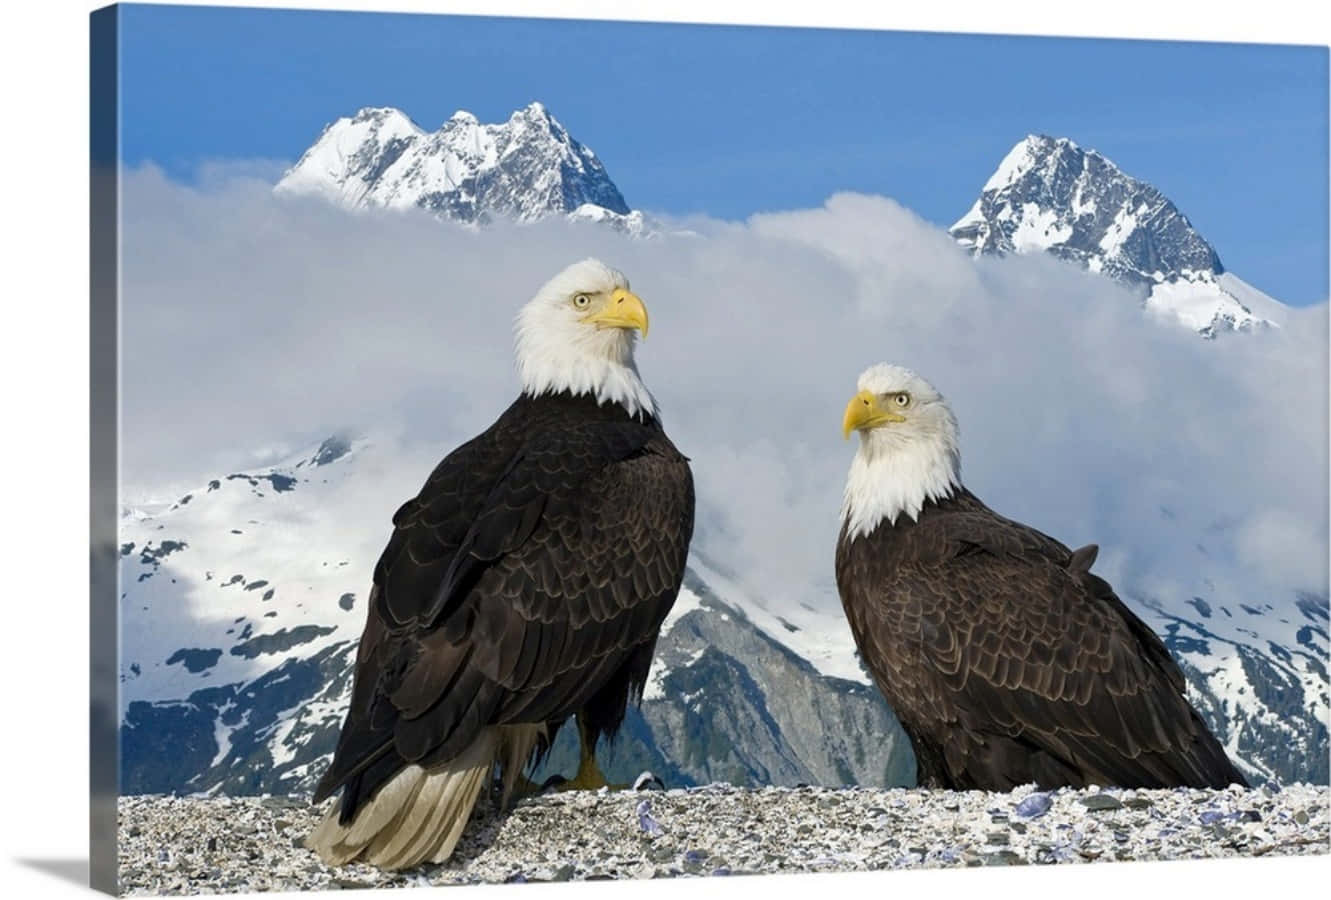 Majestic Eagles Soaring High